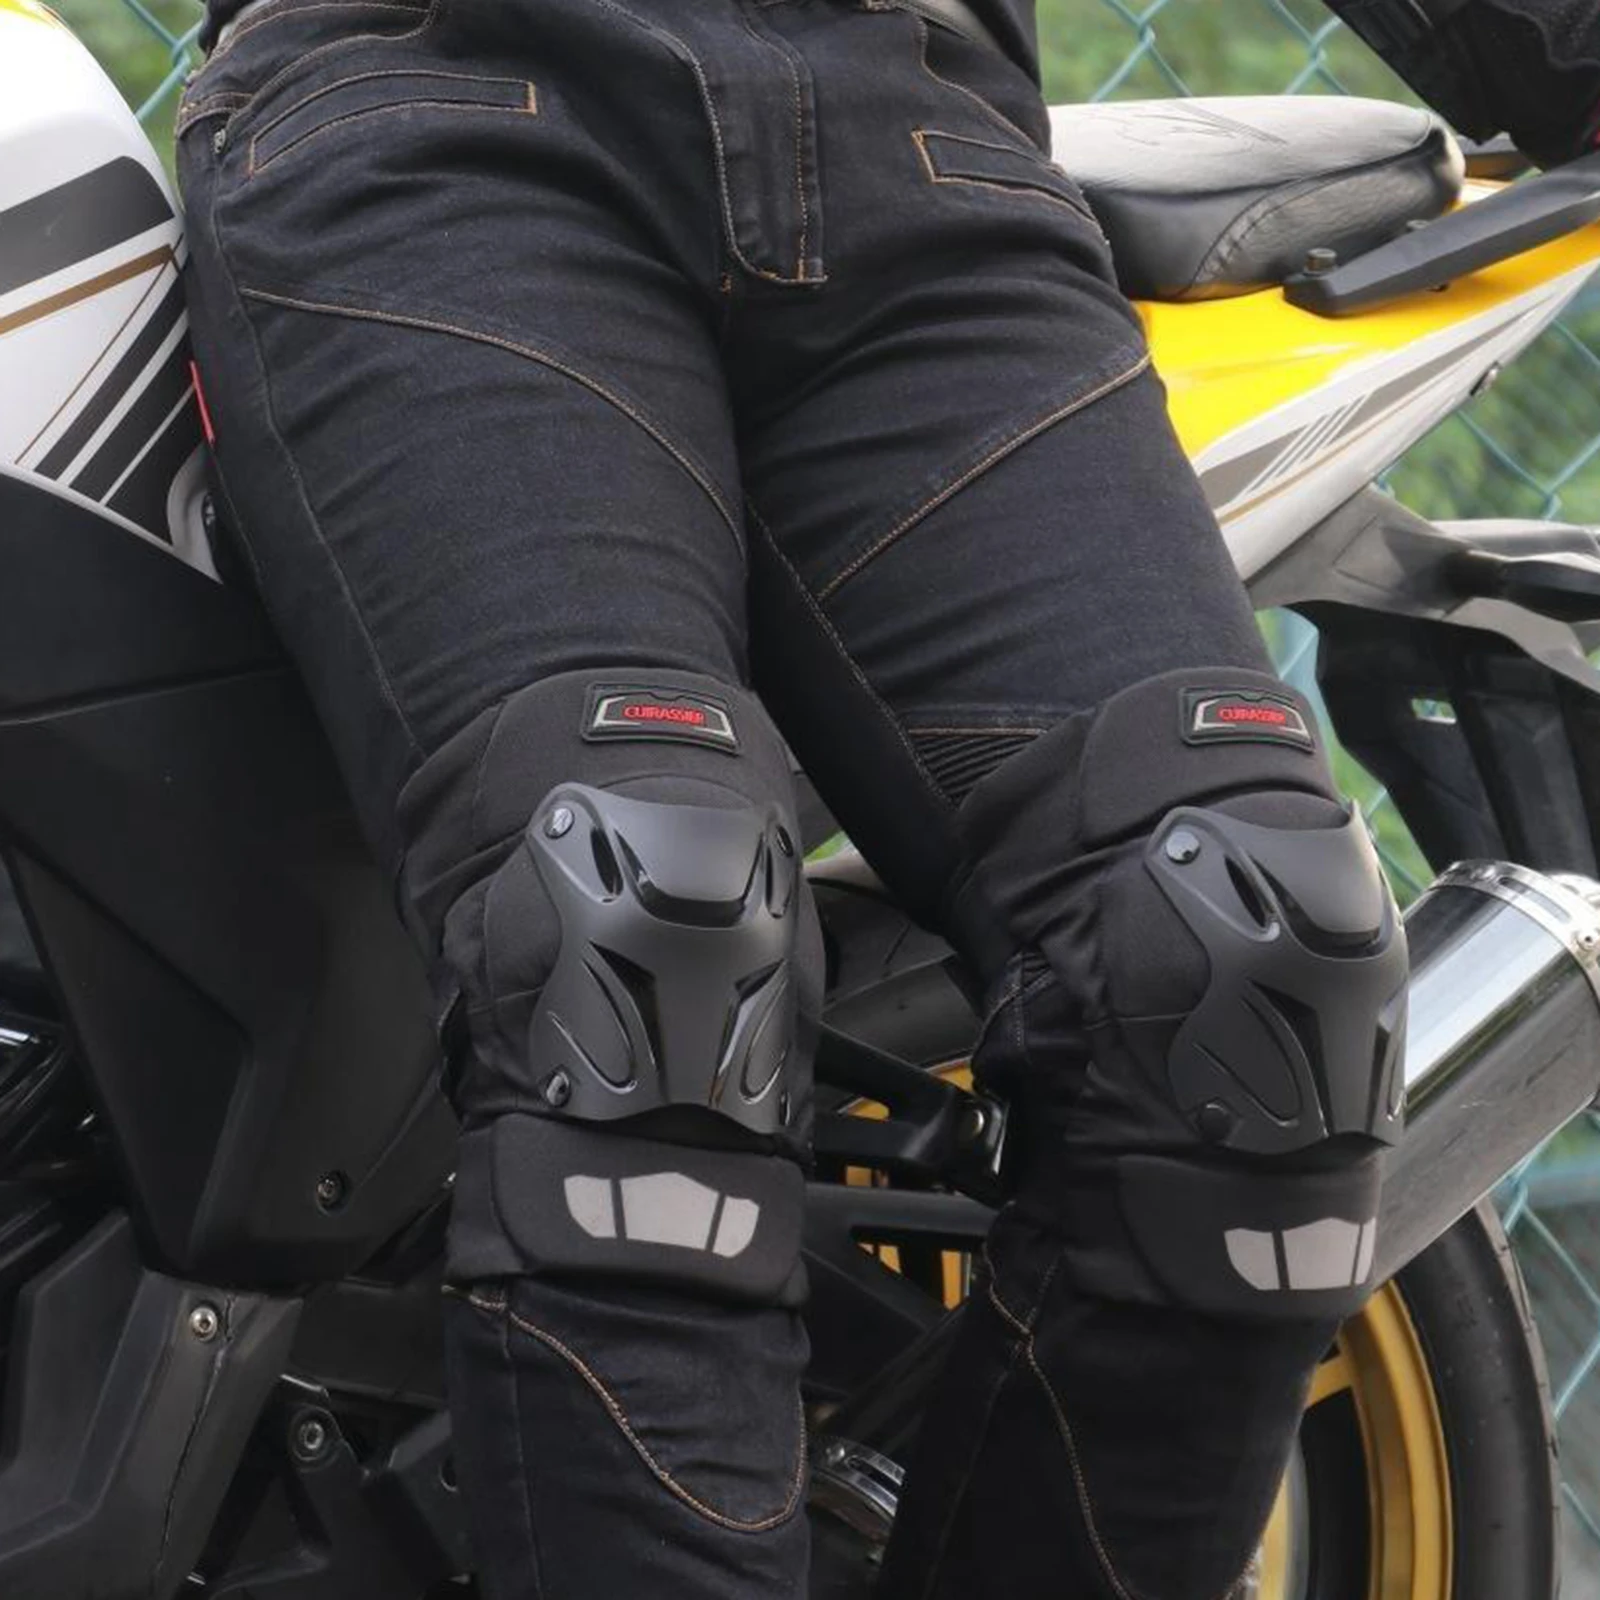 Oxford Cloth Motorcycle Knee Pad Sleeve Kneepad Protector Guard Off Road Elastic